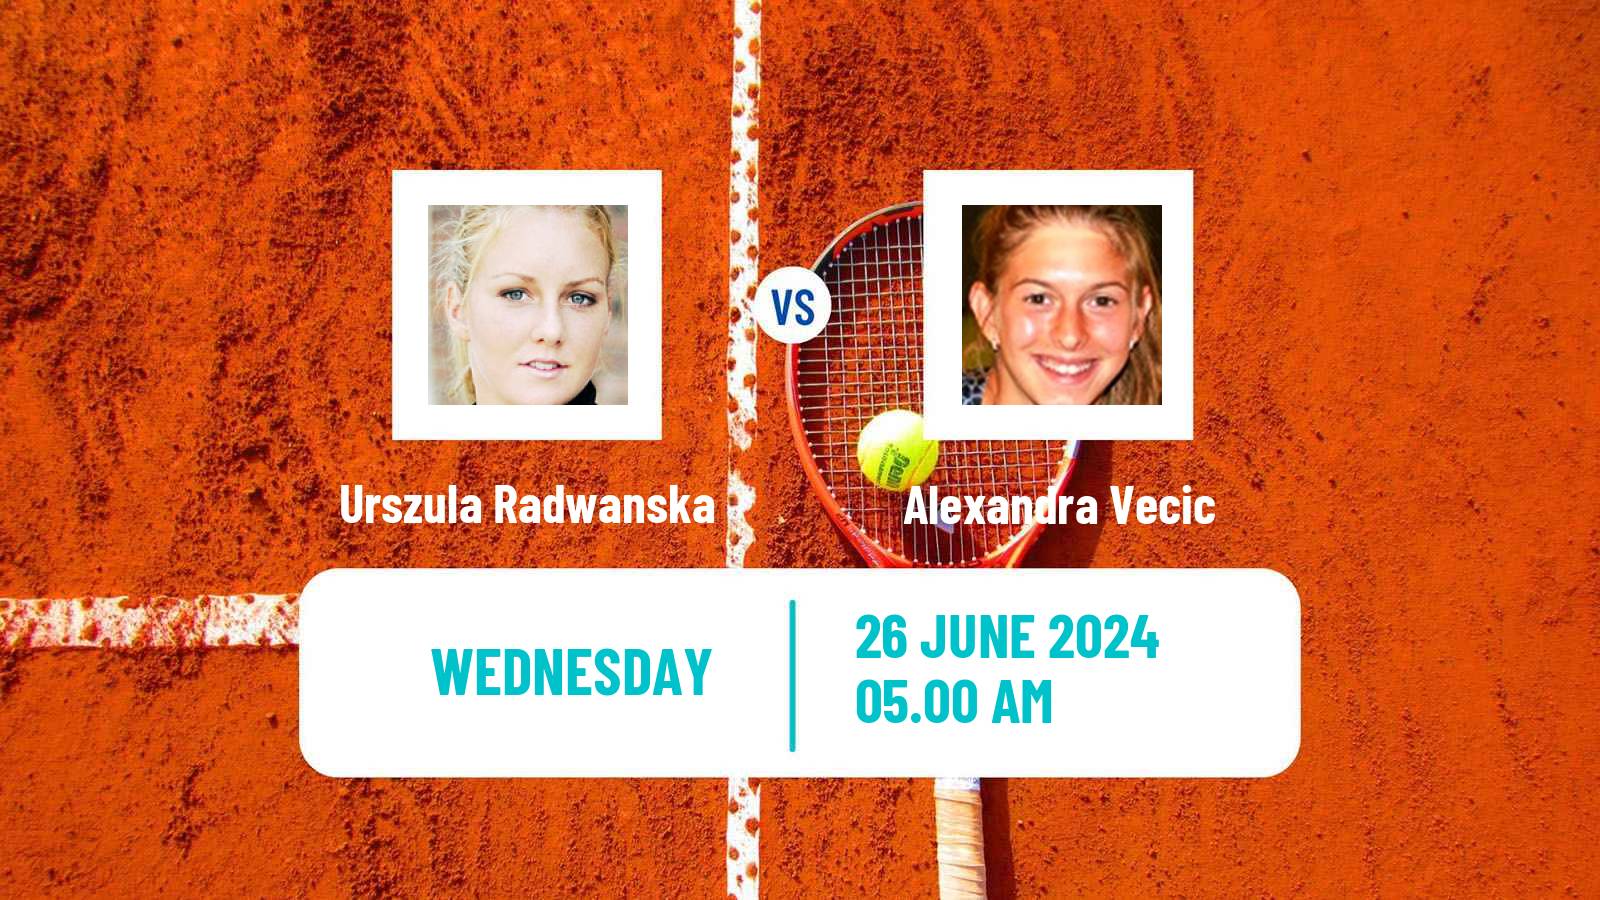 Tennis ITF W35 Klosters Women Urszula Radwanska - Alexandra Vecic